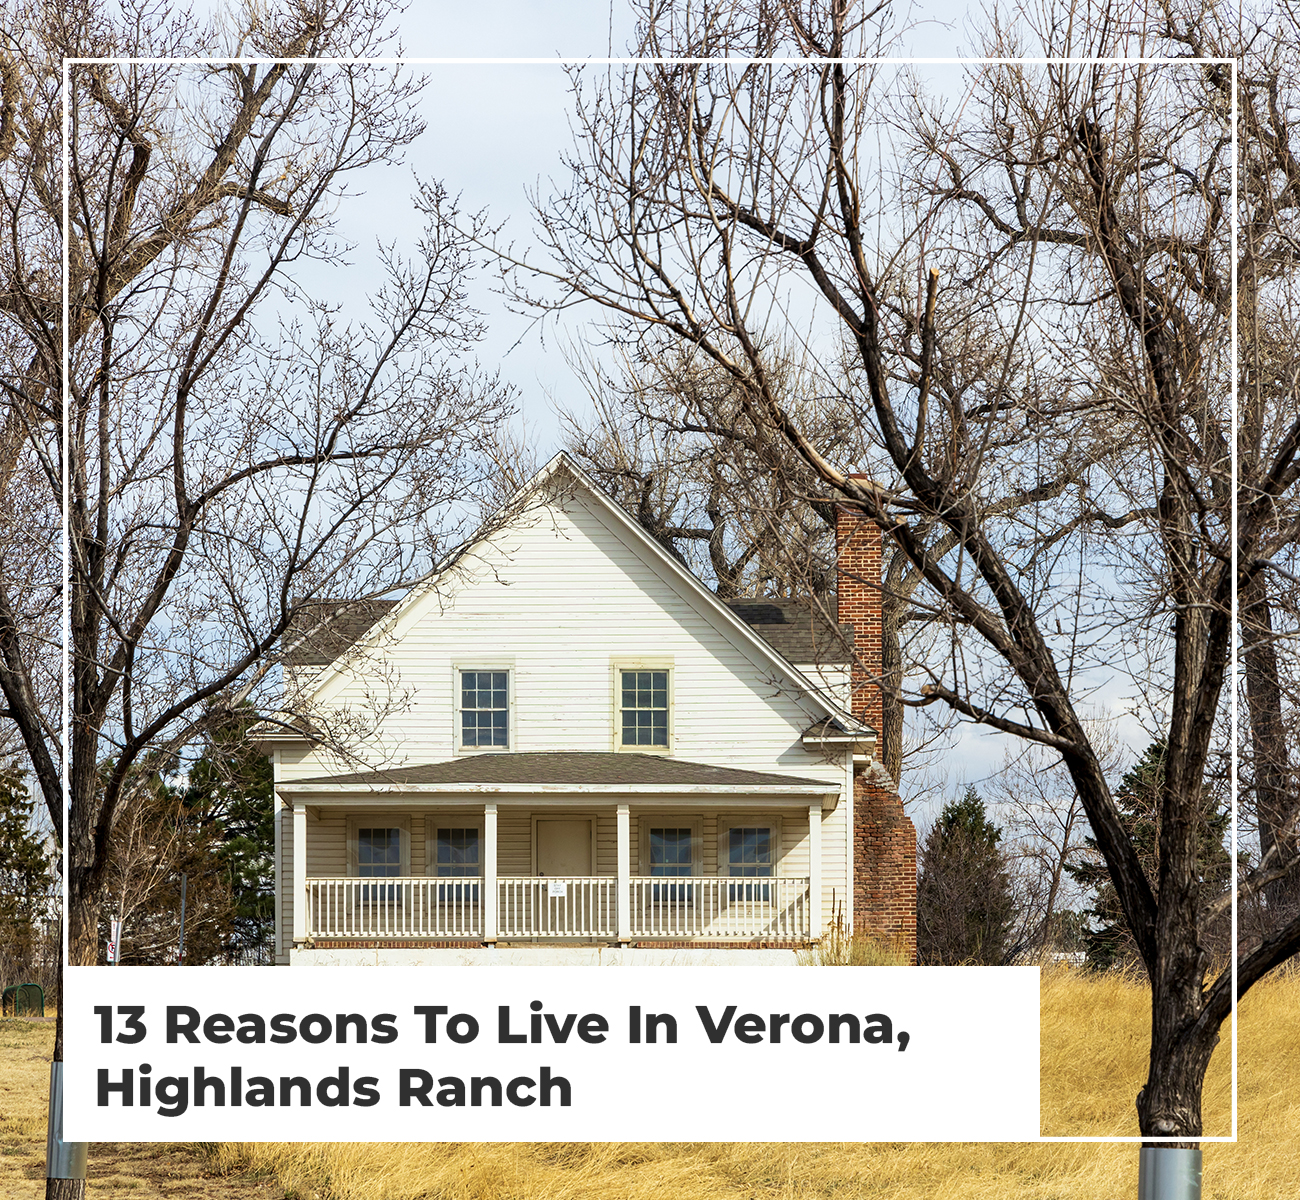 13 Reasons To Live In Verona, Highlands Ranch - Main Image